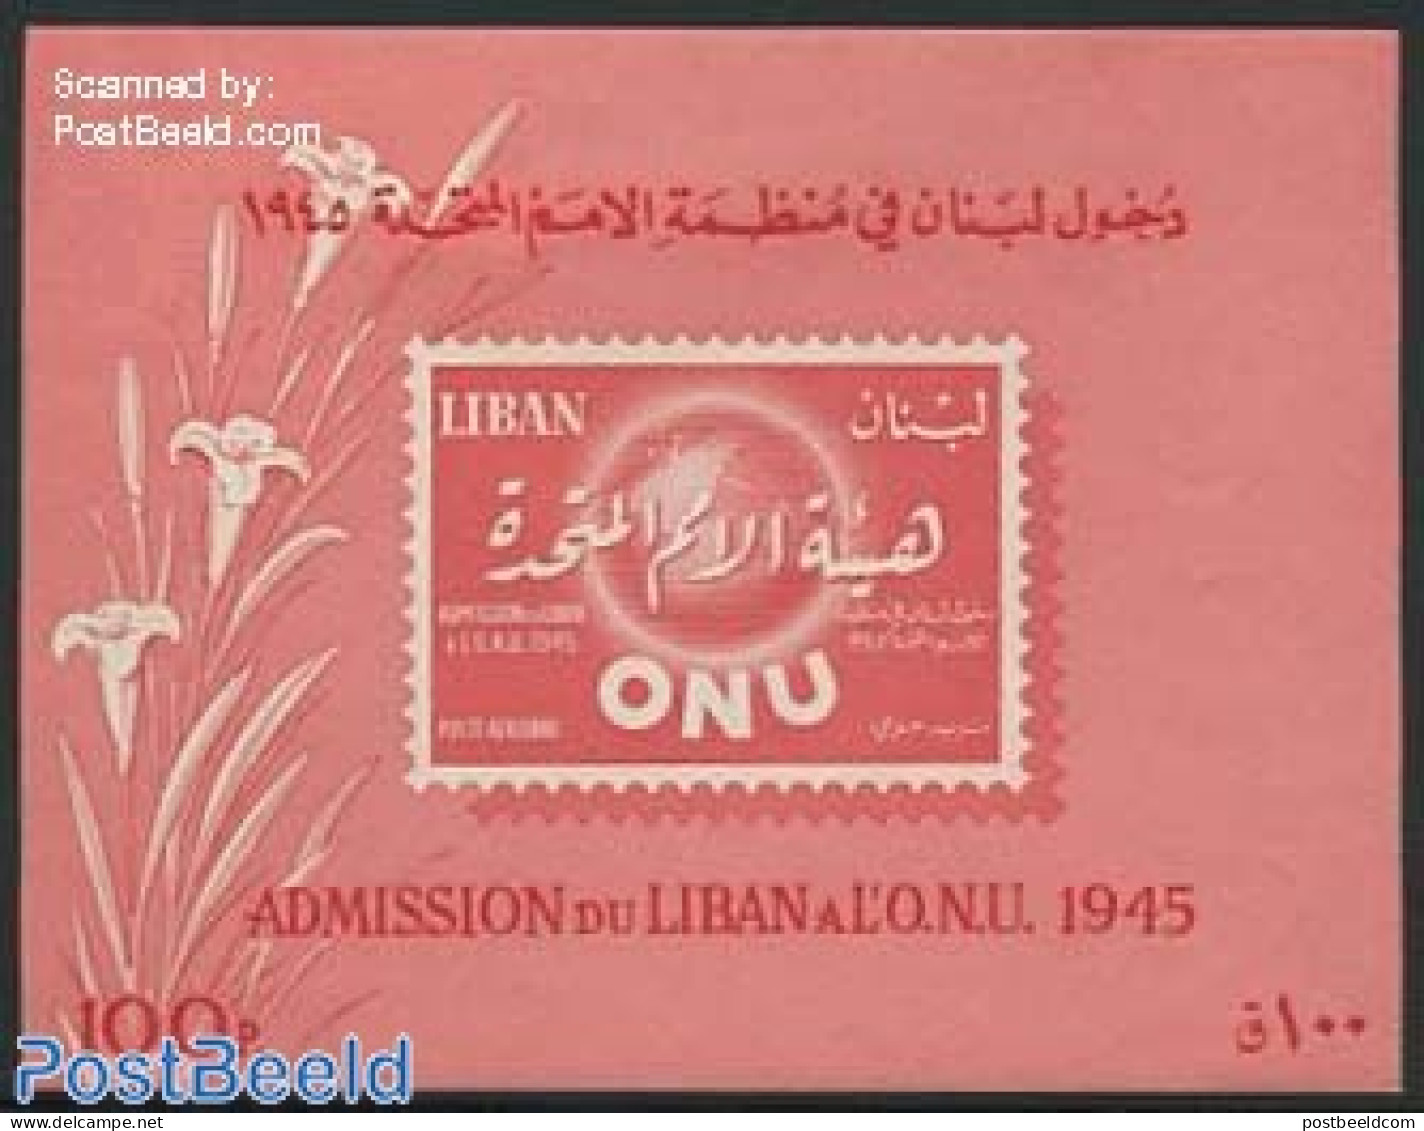 Lebanon 1967 UN Membership S/s, Mint NH, History - Nature - United Nations - Flowers & Plants - Stamps On Stamps - Briefmarken Auf Briefmarken